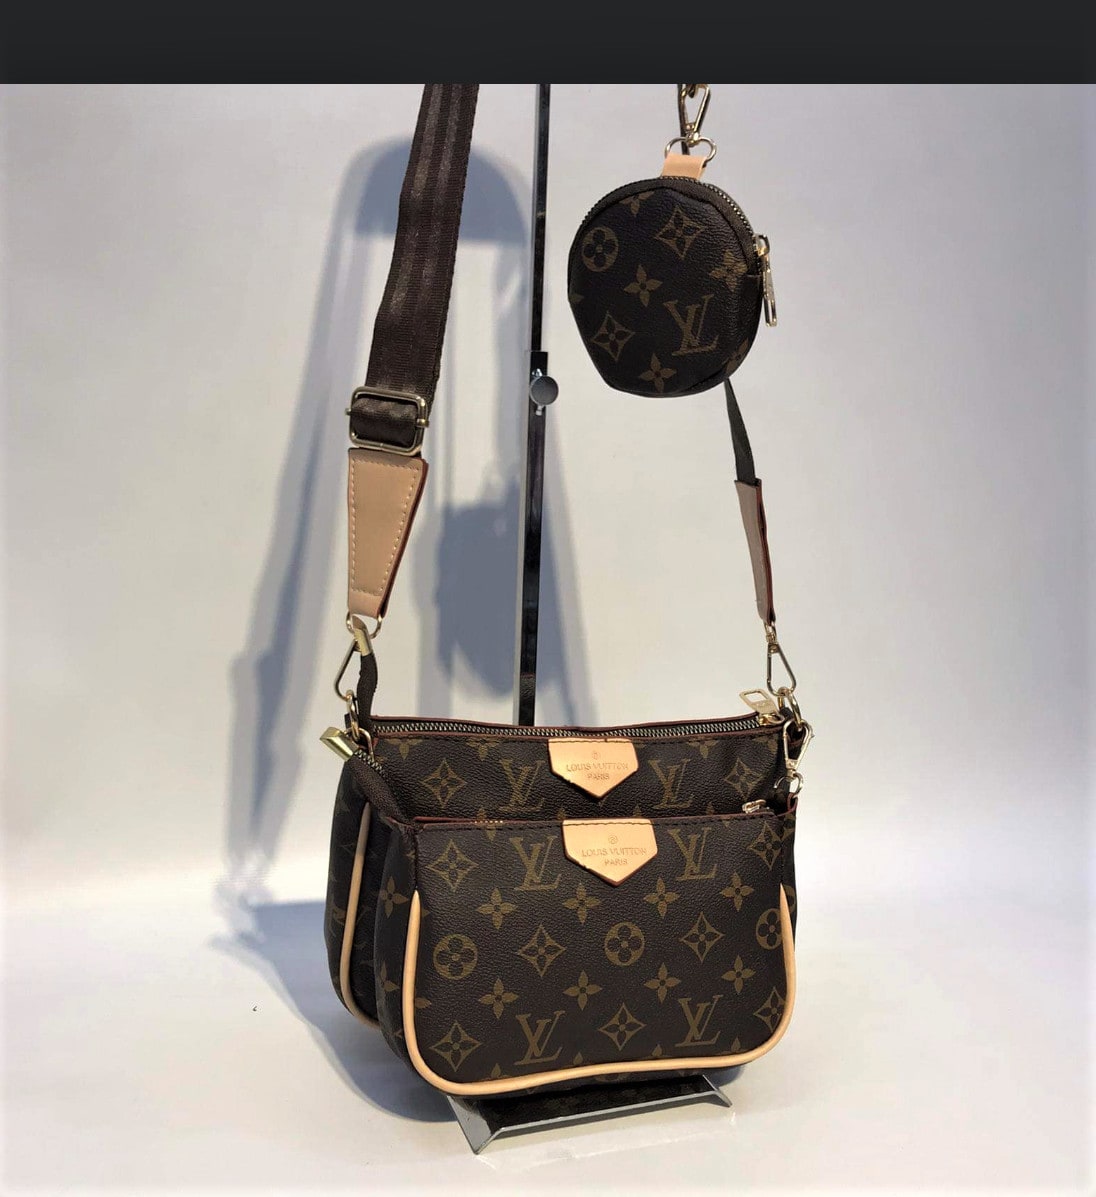 Cuánto cuesta un bolso de Louis Vuitton? - CHIC Magazine